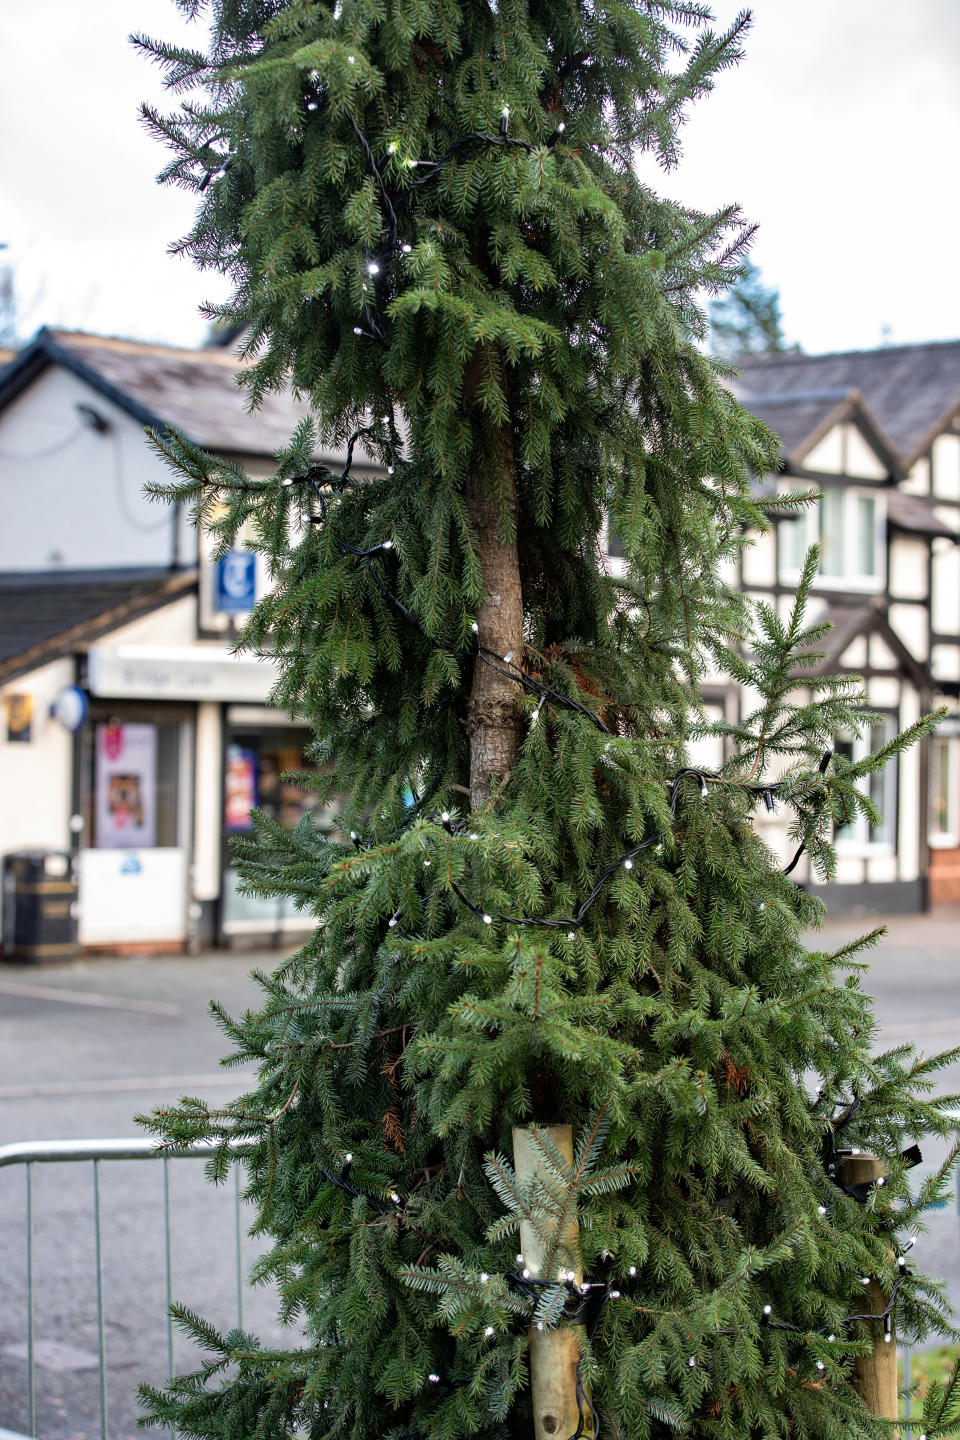 The threadbare Christmas tree is light on decorations. (SWNS)